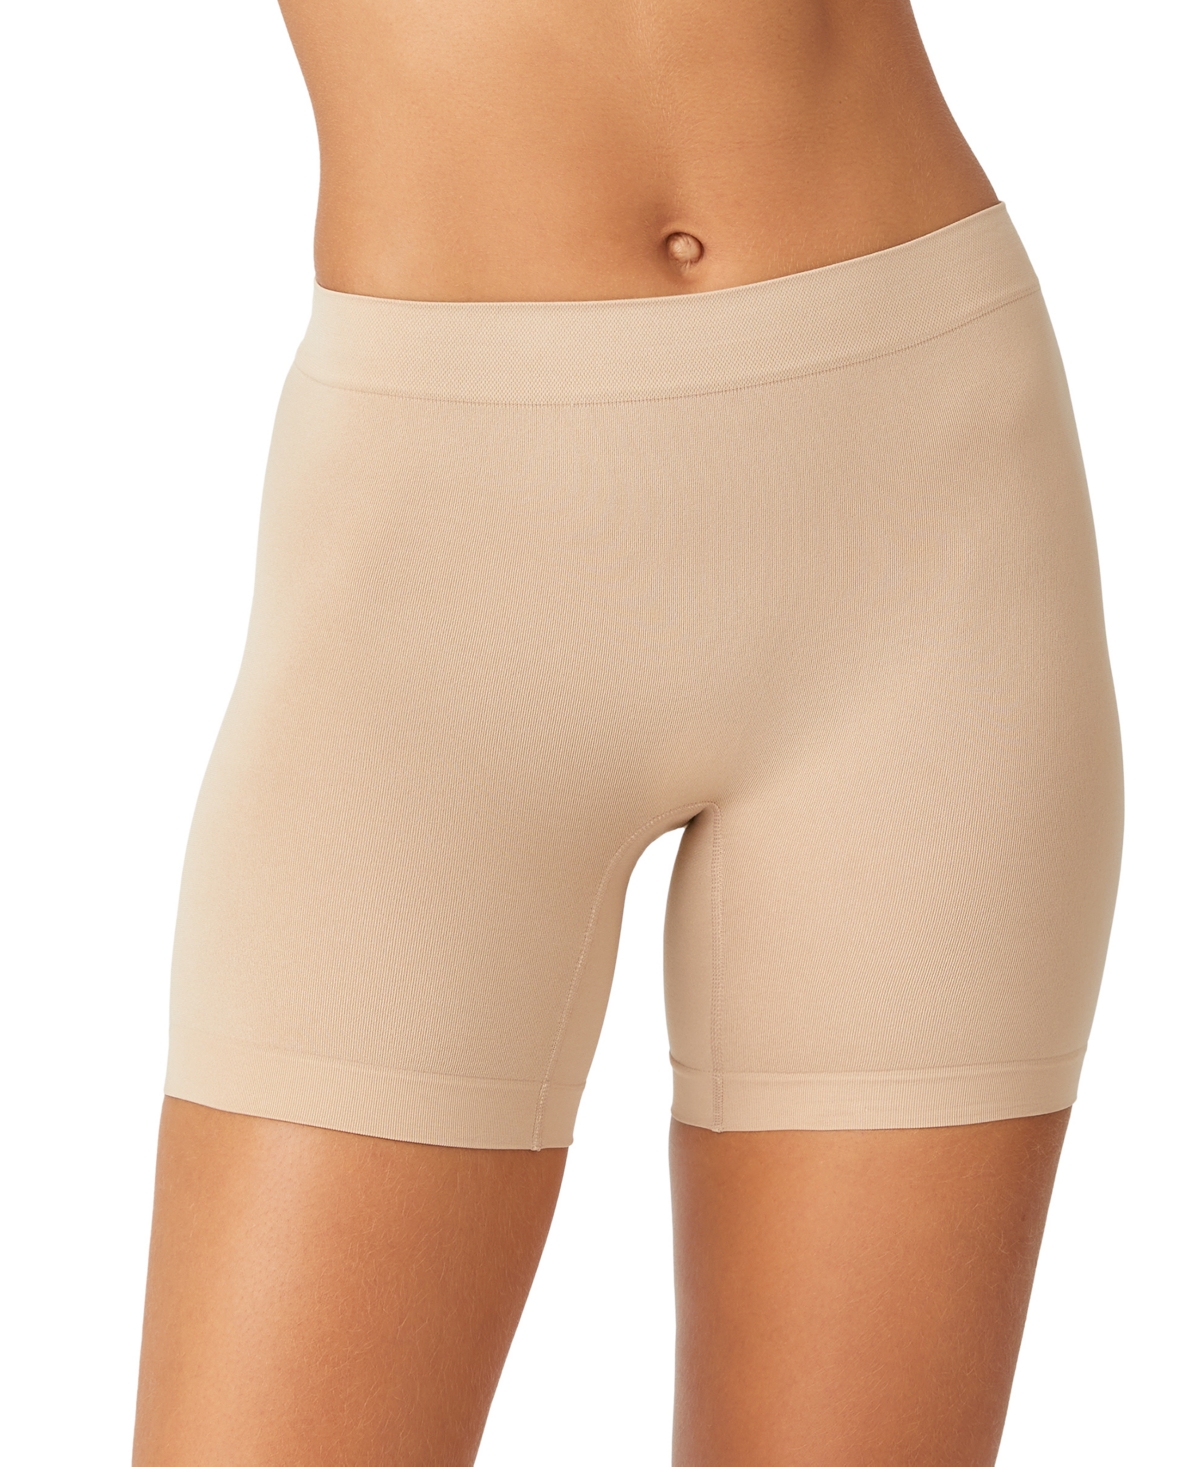 Women's Comfort Intended Slip Shorts 975240 - Au Natural